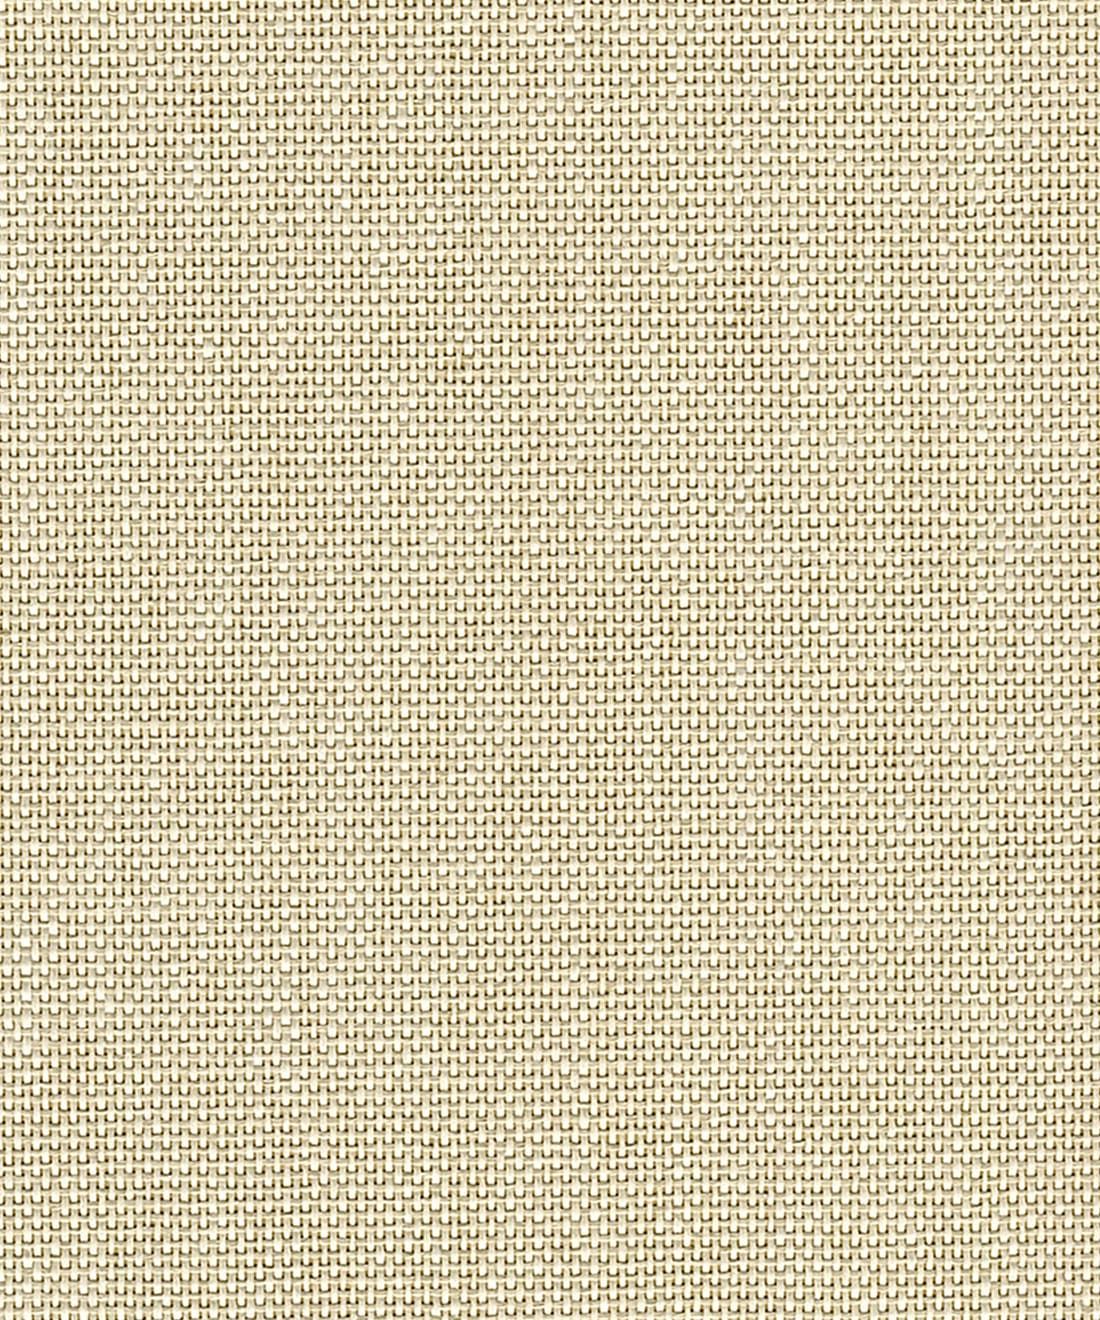 Spring Paperweave Grasscloth Wallpaper - Beige